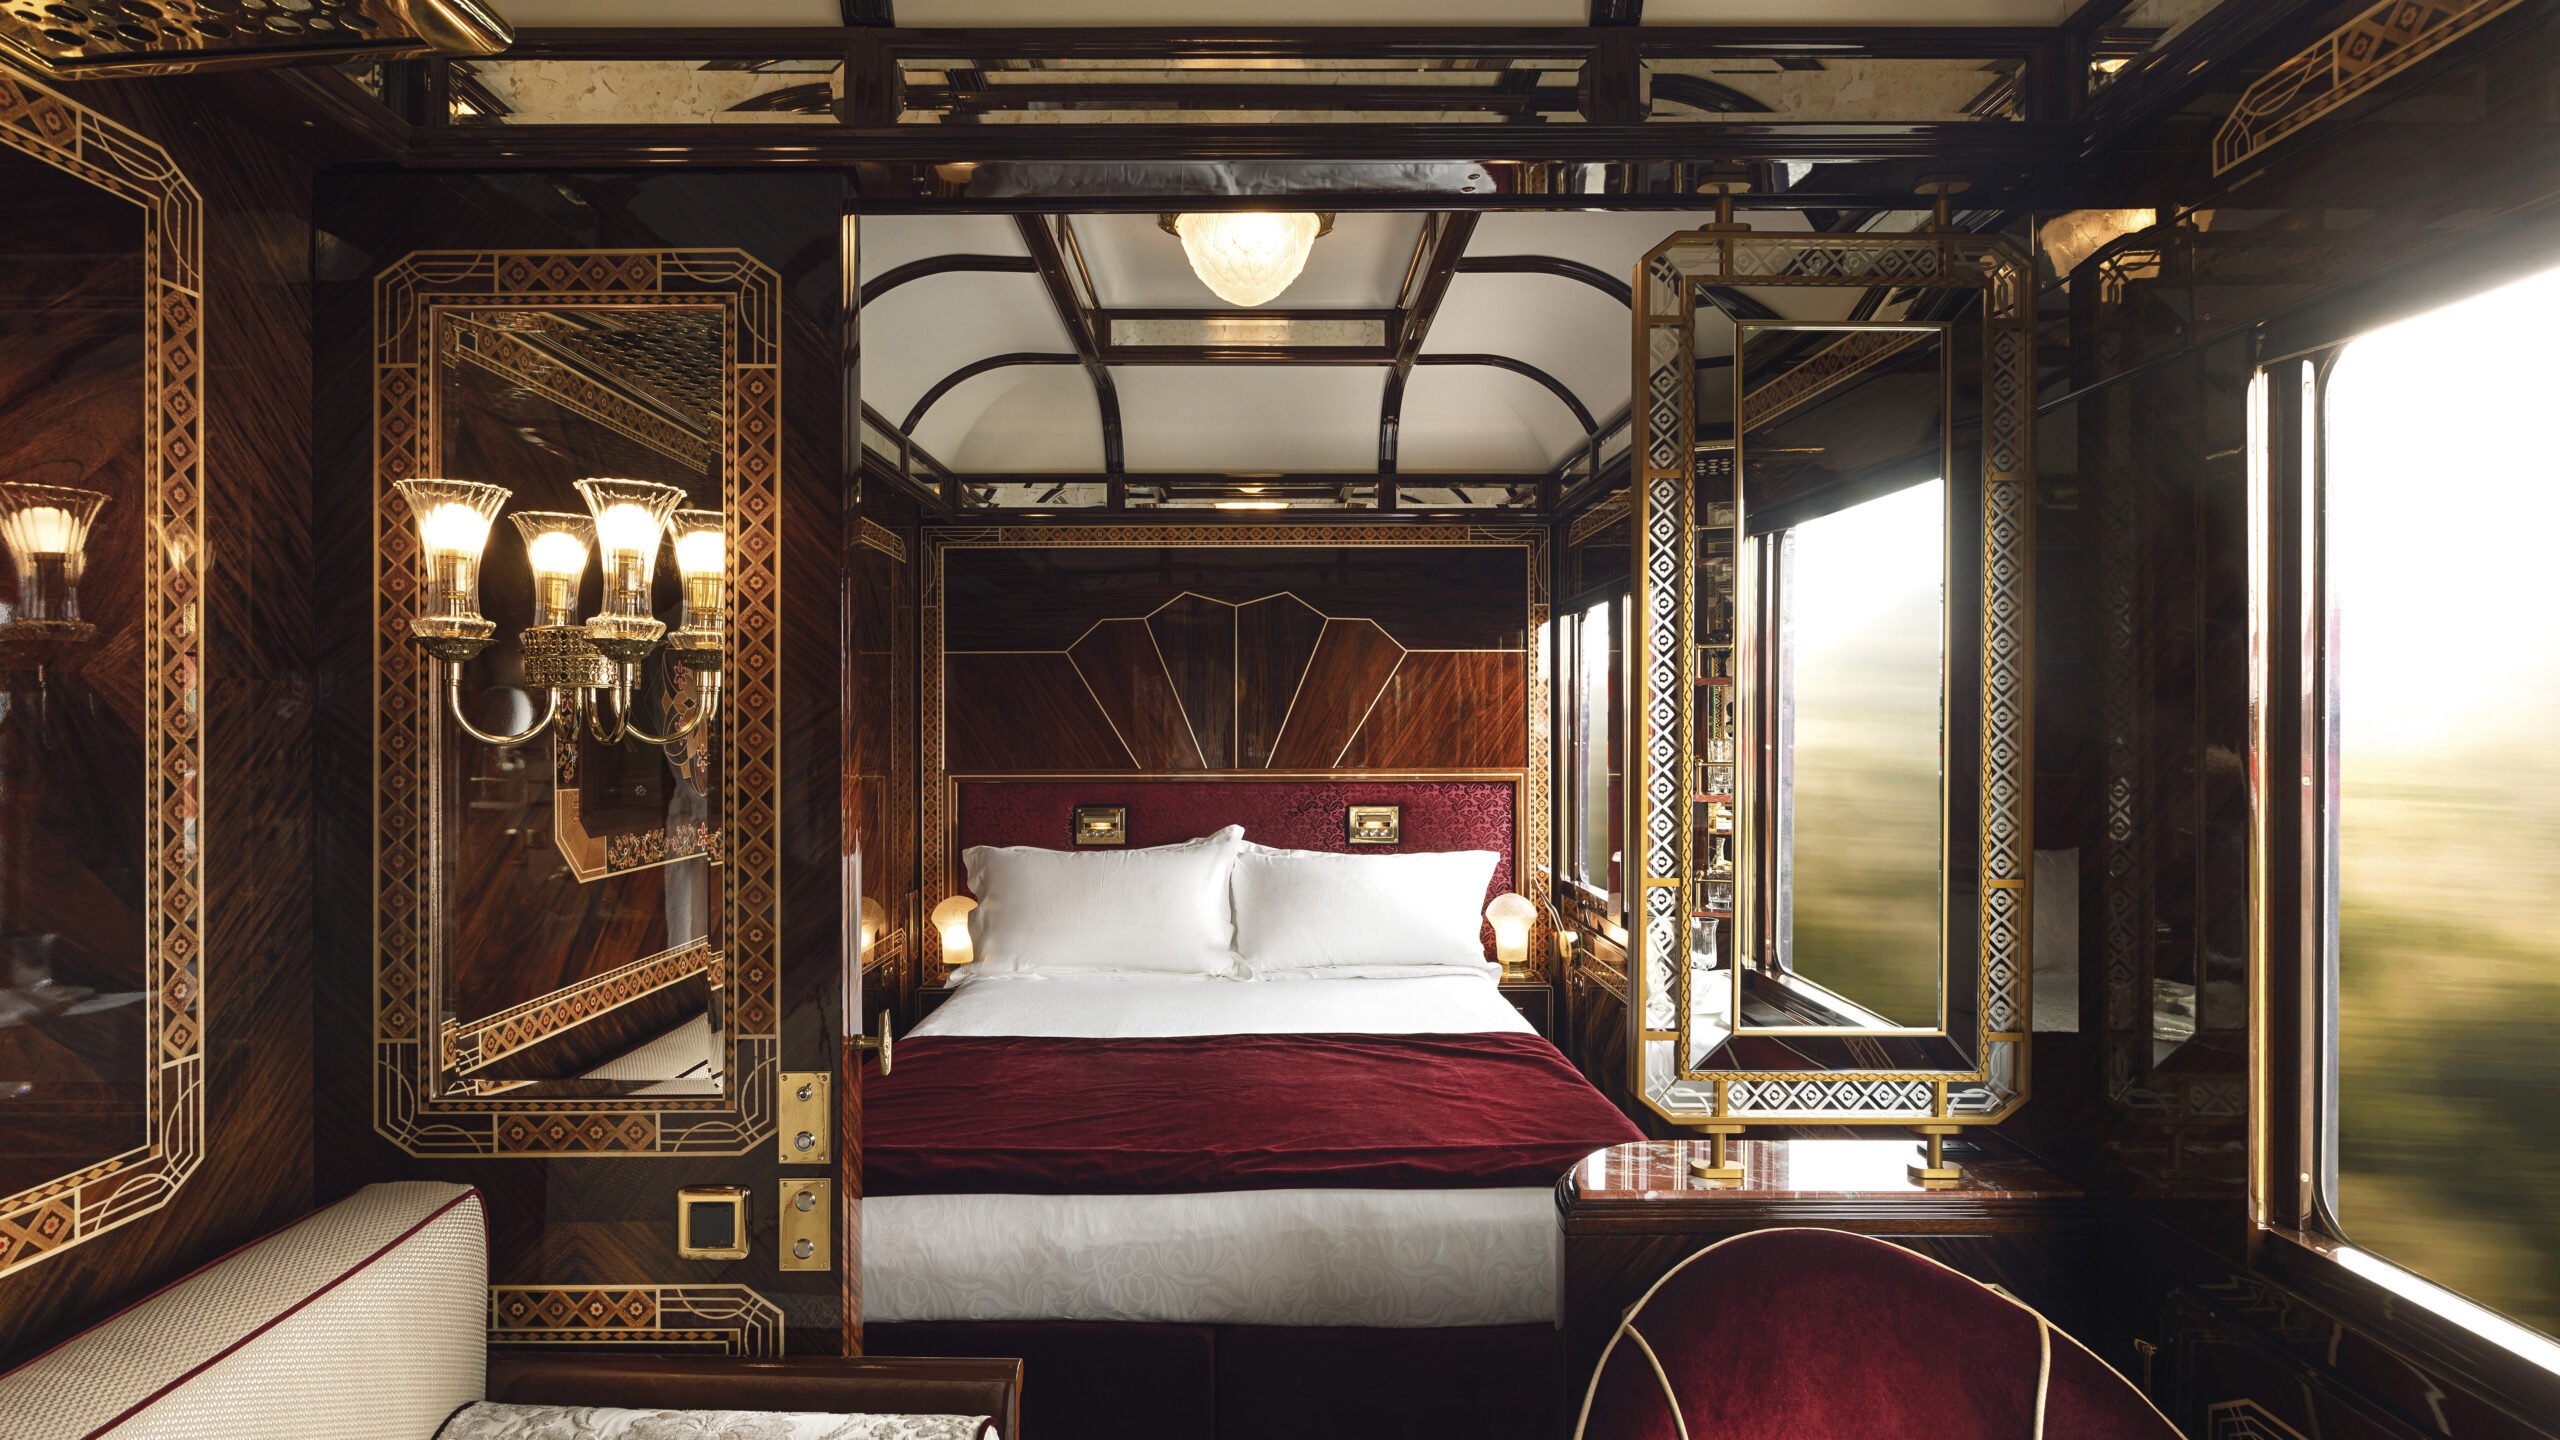 Venice Simplon Orient Express - JPA Design - Interiors